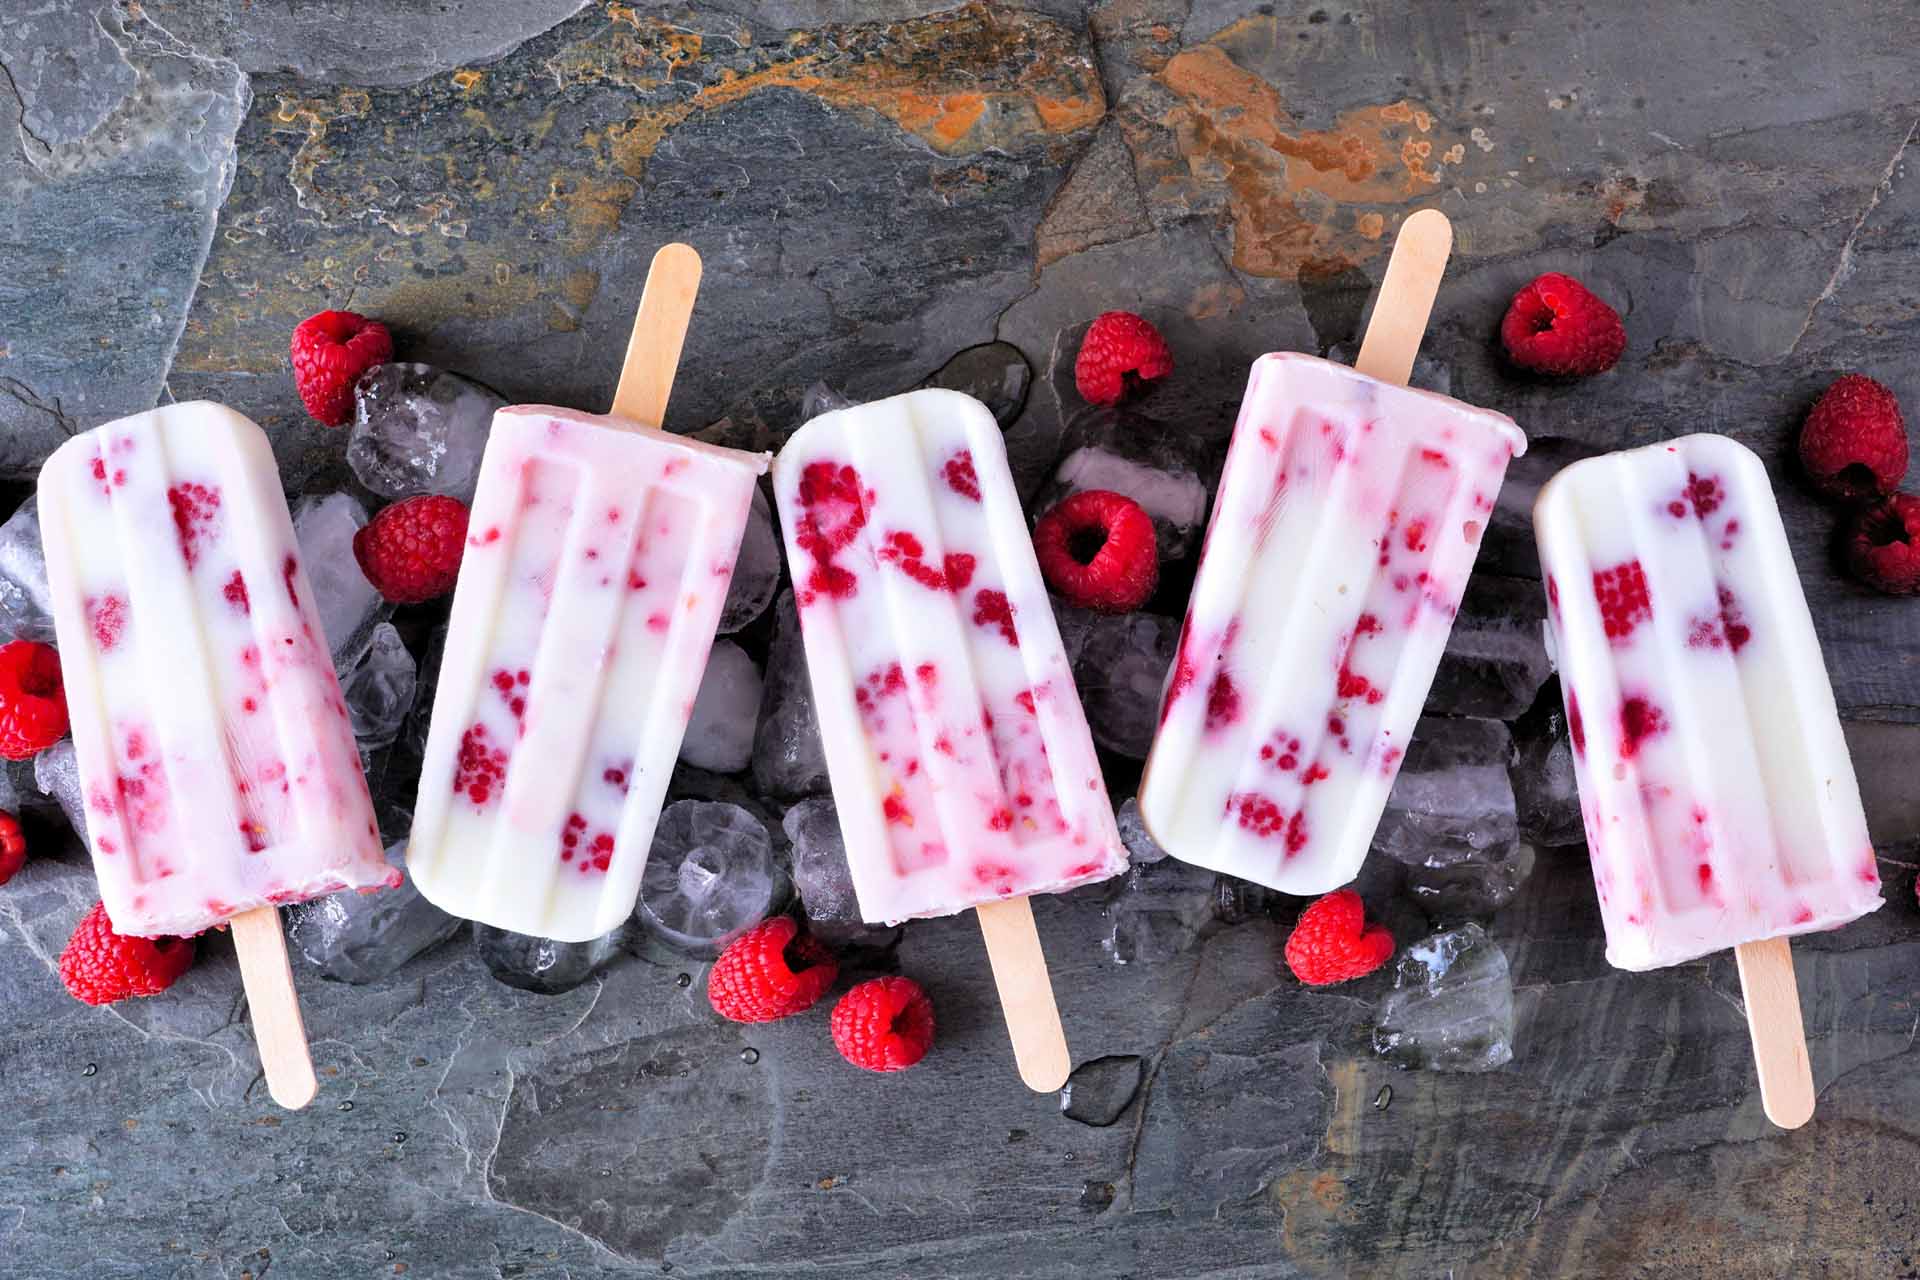 Featured image for “Raspberry Yogurt Ice Pops”